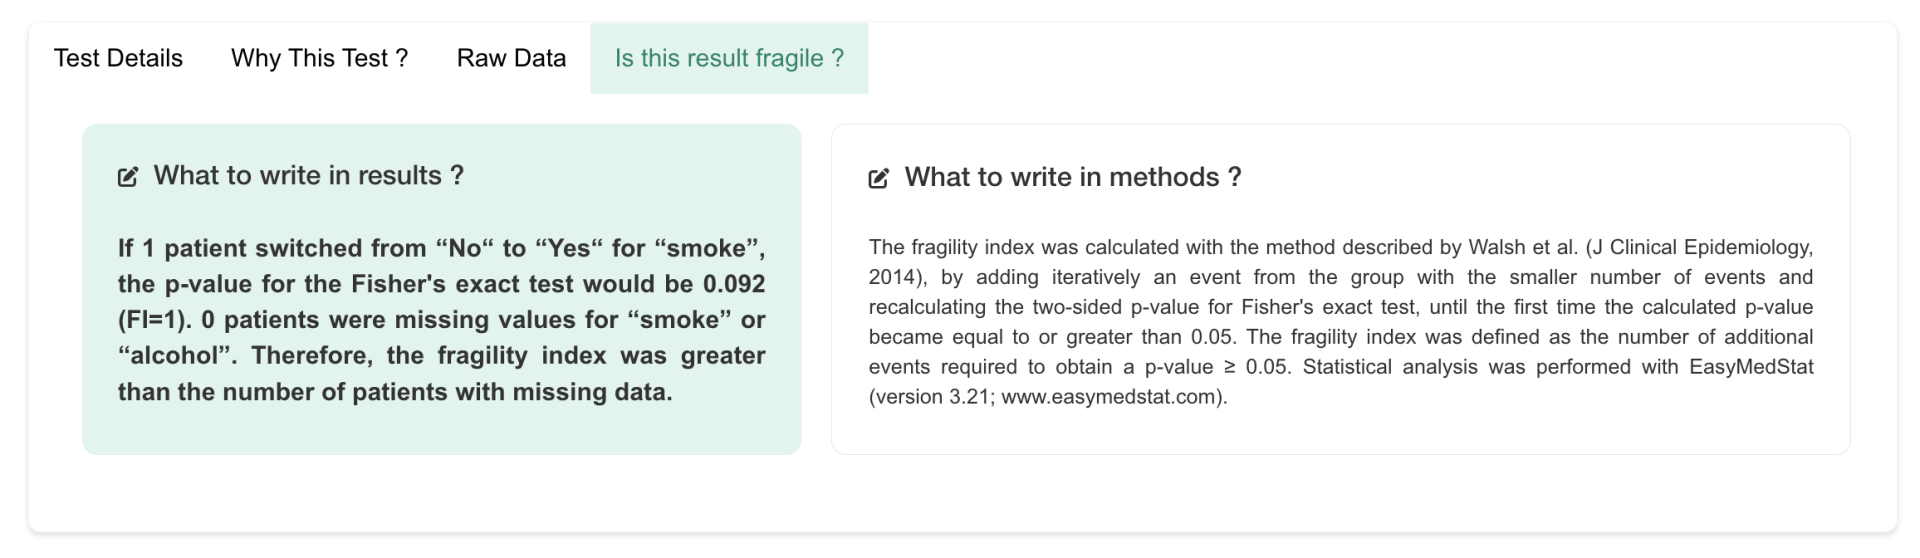 Fragility index calculator